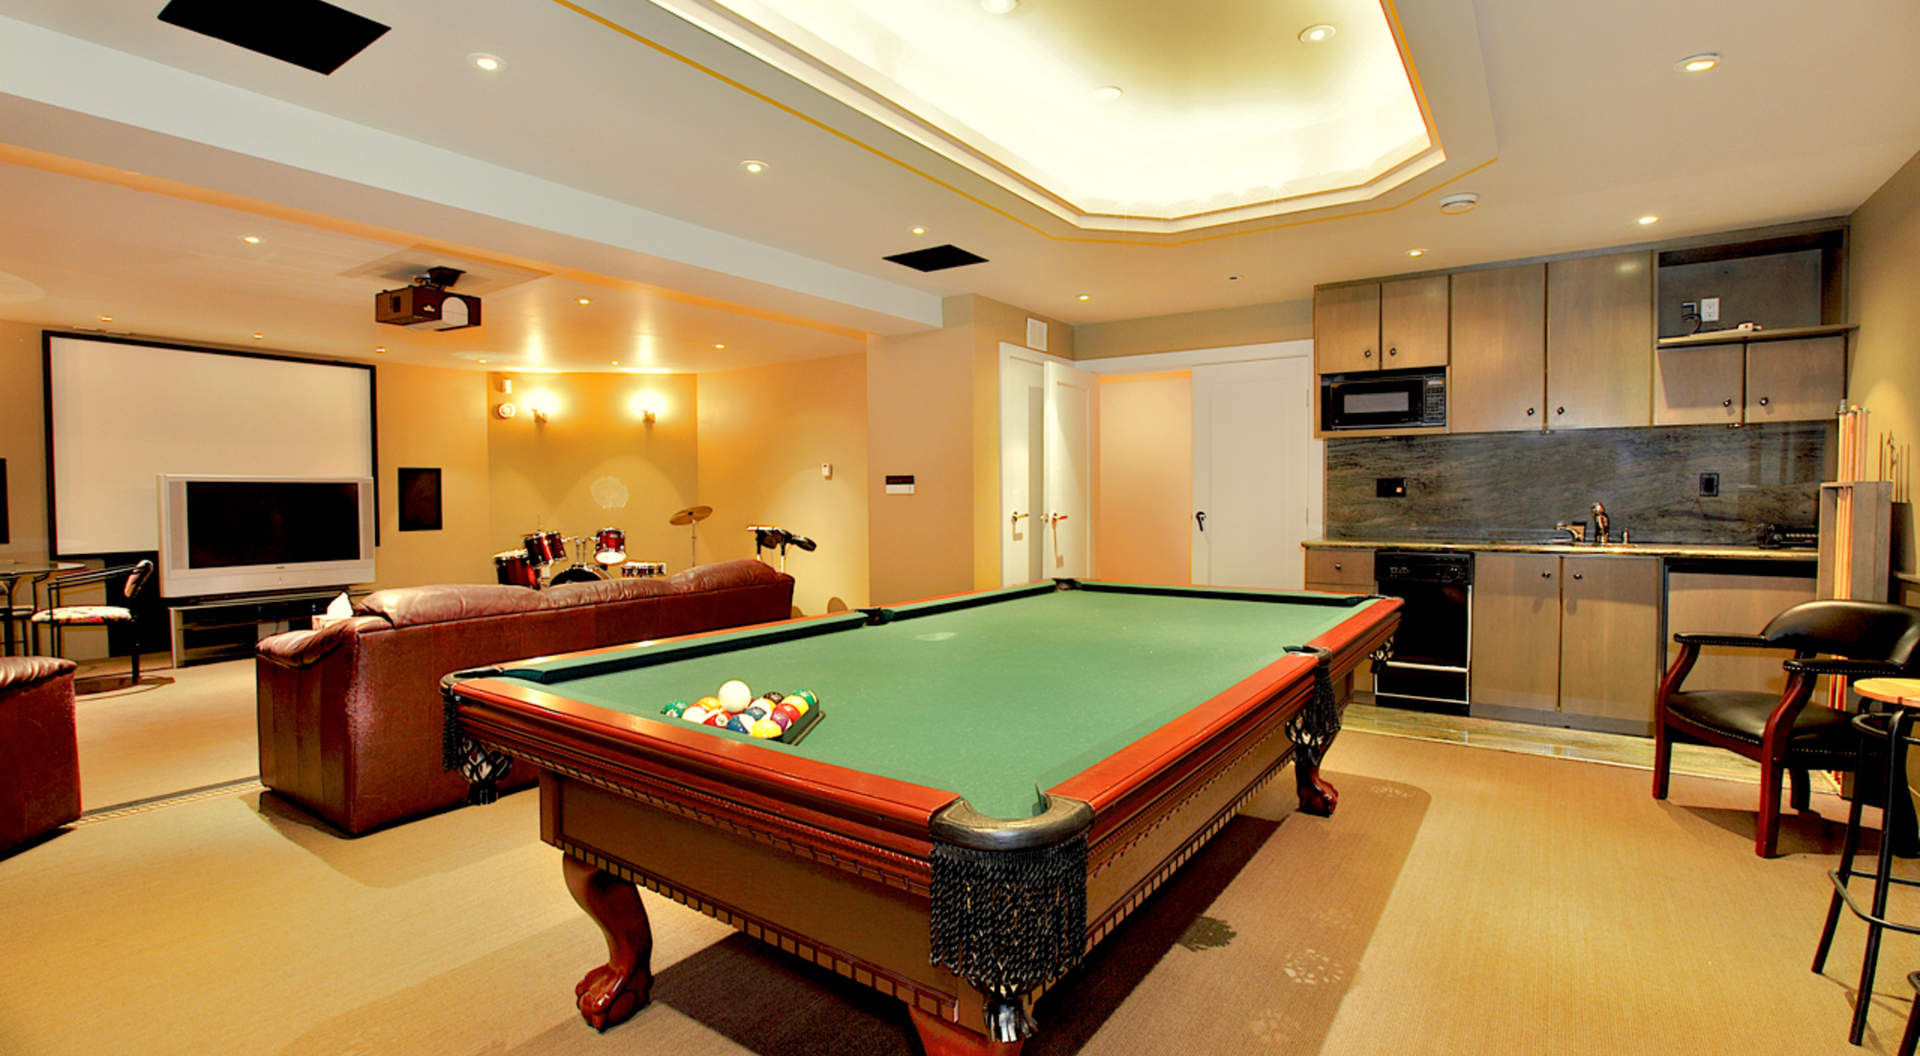 Billiard Room with Wet Bar